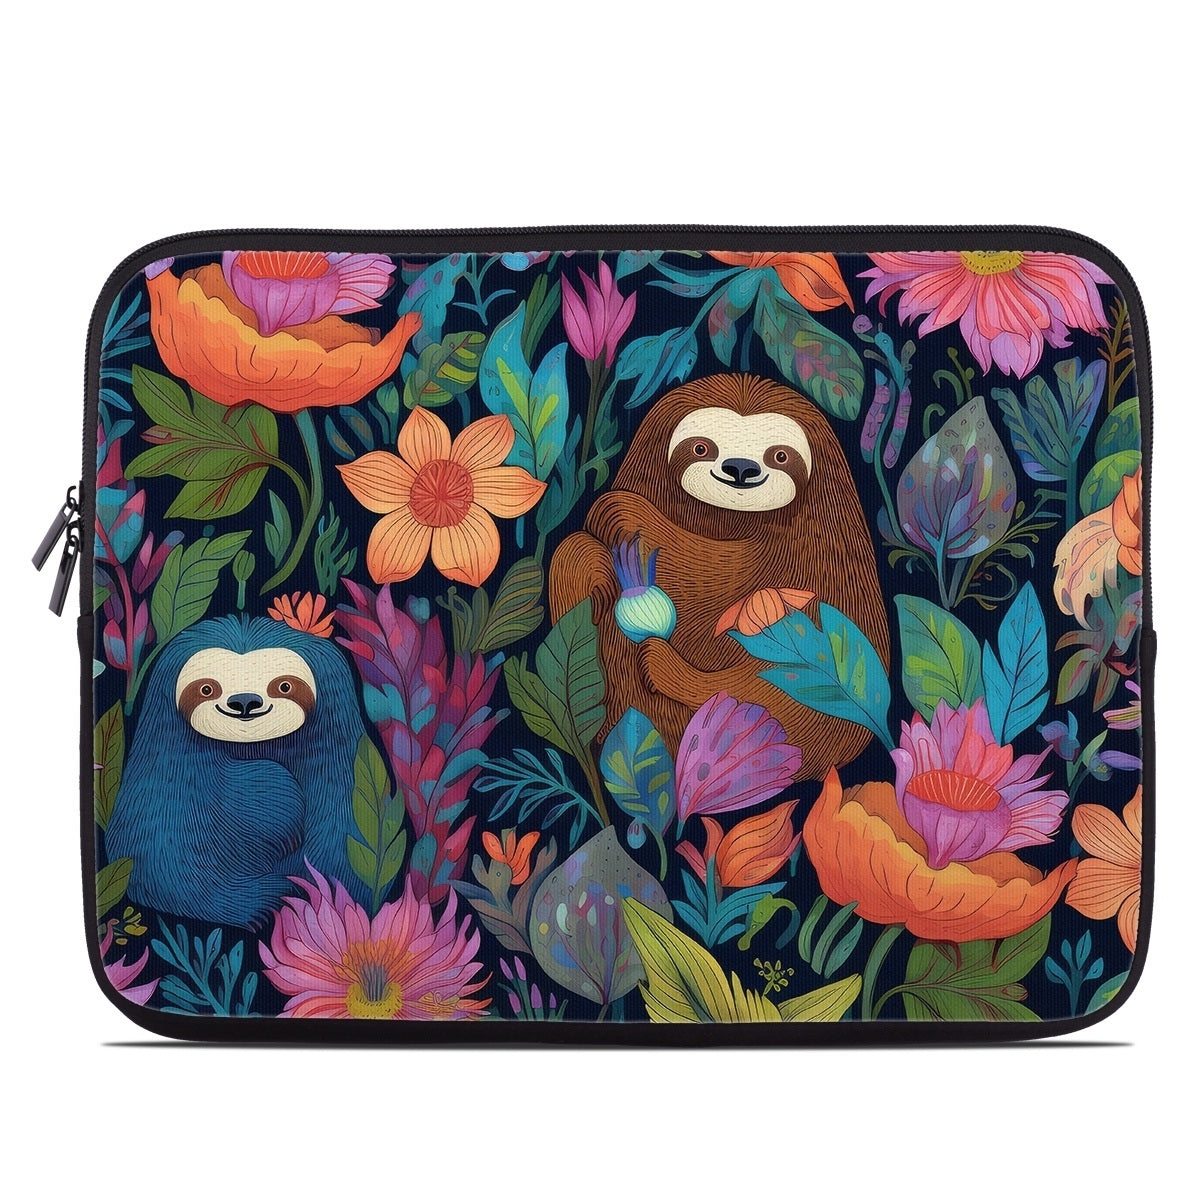 Garden of Slothy Delights - Laptop Sleeve